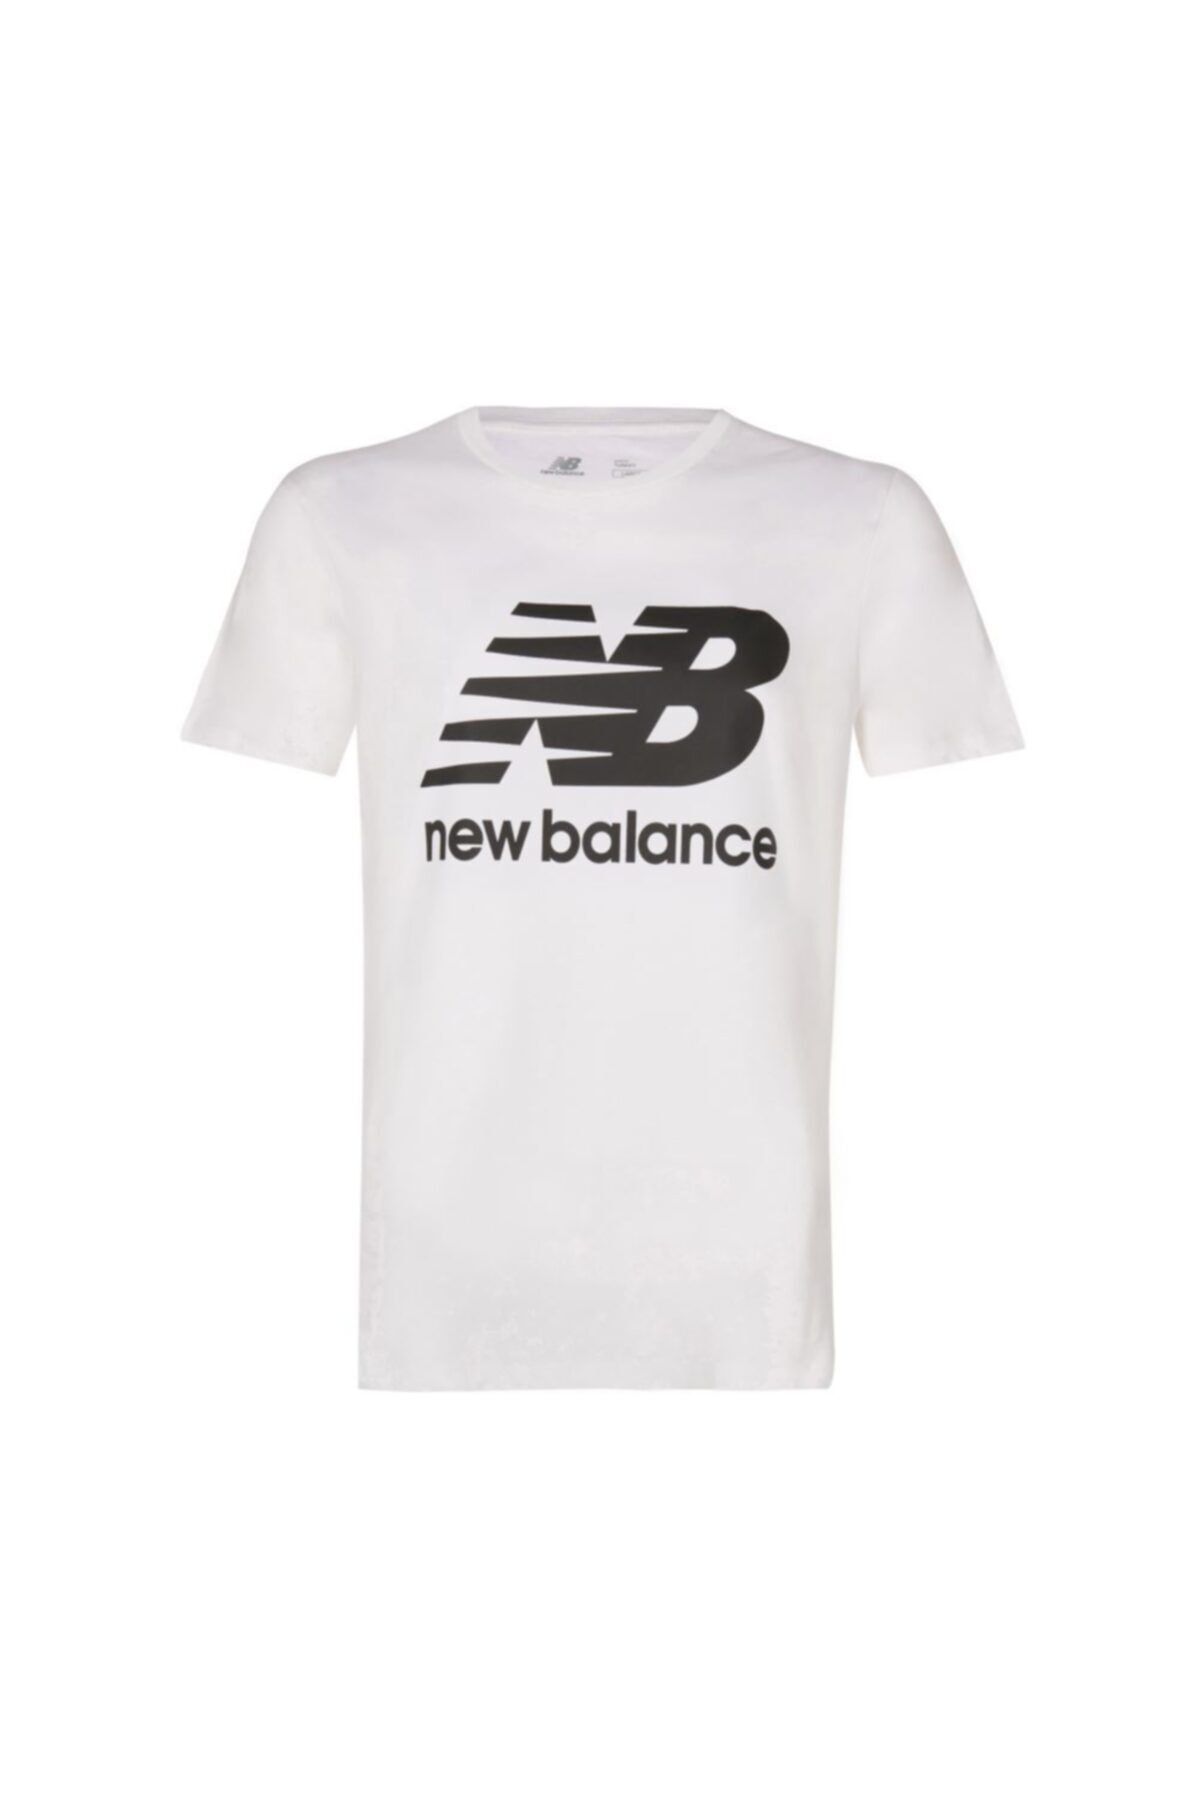 New Balance Wnt1203 Kadın Beyaz T-Shirt